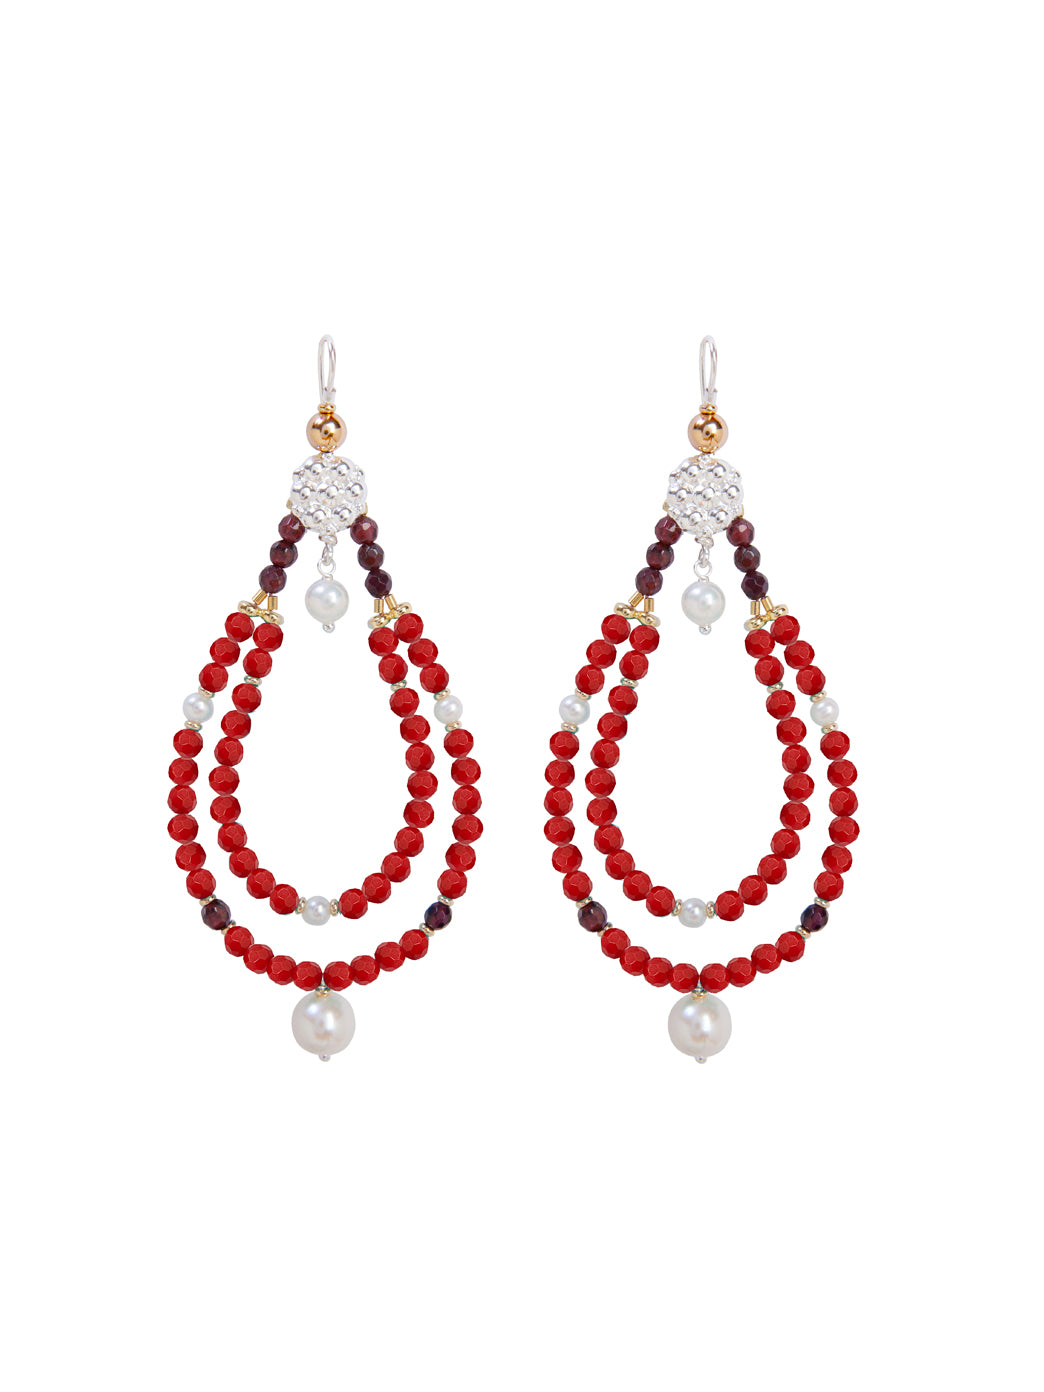 Fiorina Jewellery Rahini Earrings Red Coral